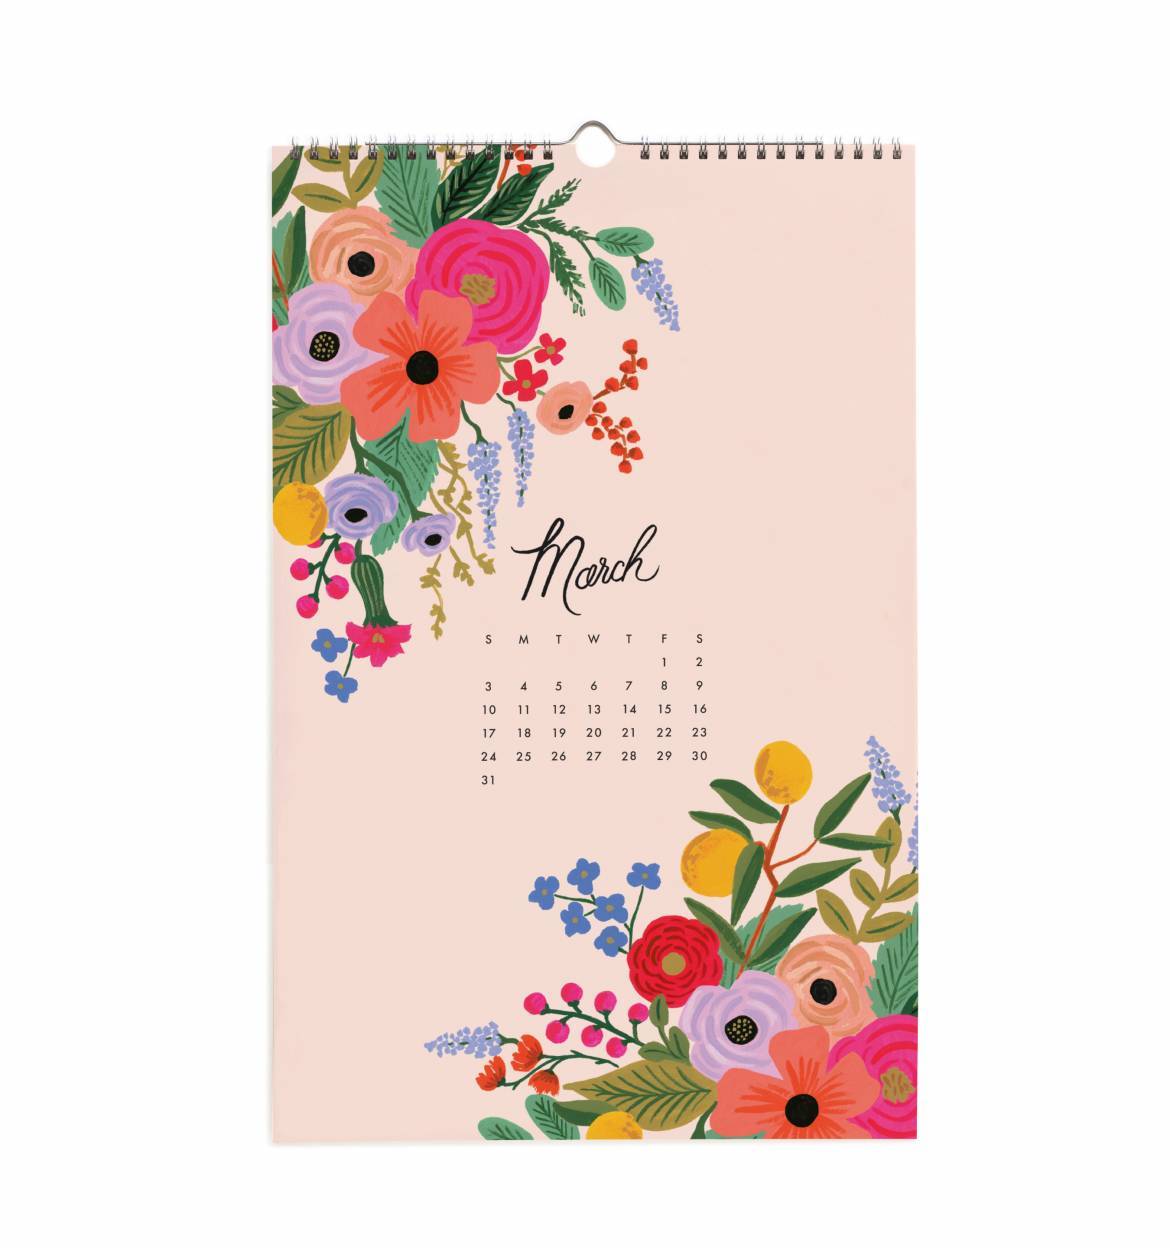 Wall Calendar 2019 - Wildwood